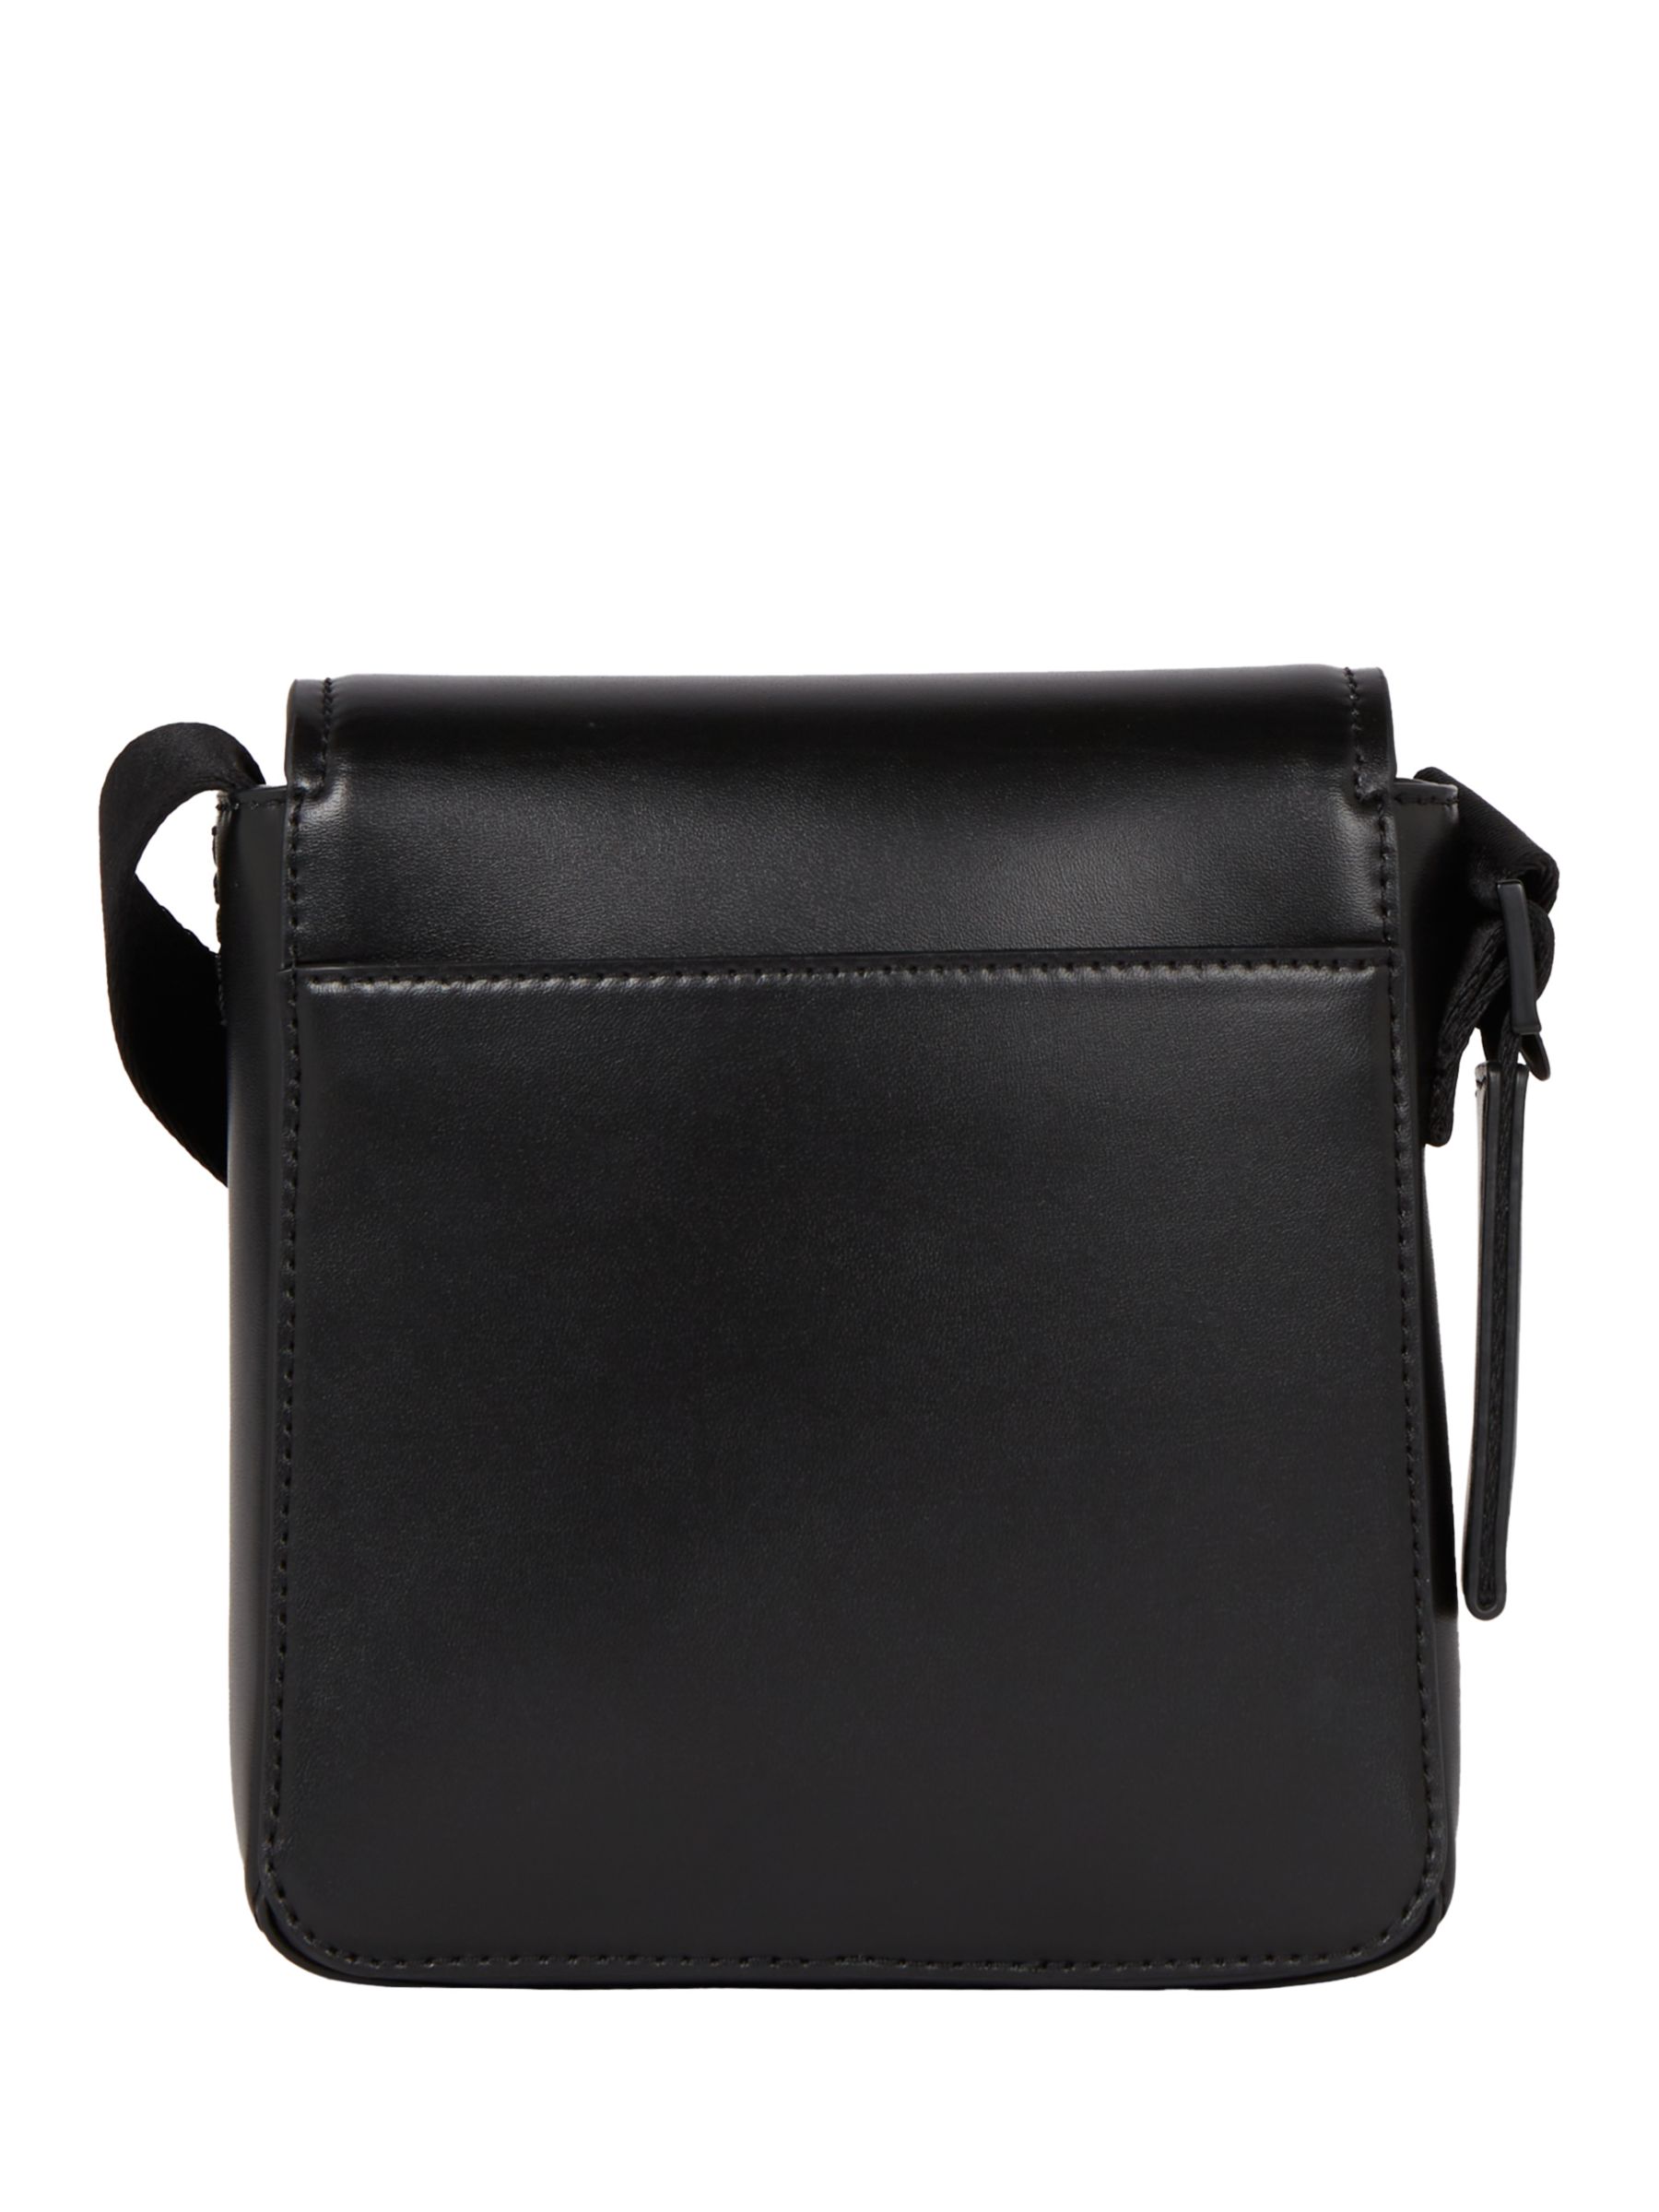 Calvin Klein Focus Cube Reporter Bag, Black at John Lewis & Partners